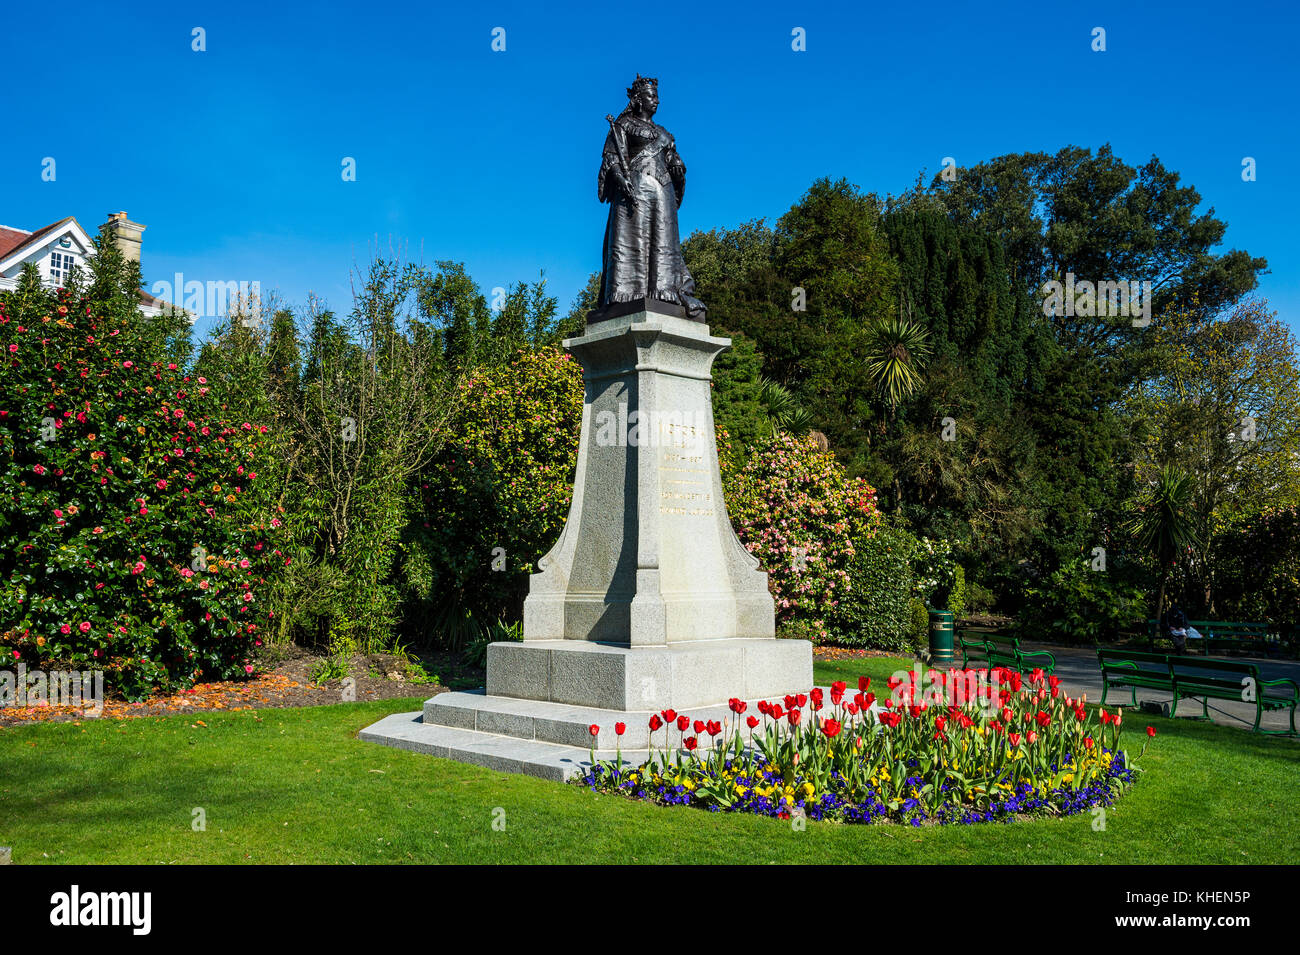 Monumento Victoria in Candie Gardens, saint peter port guernsey isola, isole del canale, Gran Bretagna Foto Stock